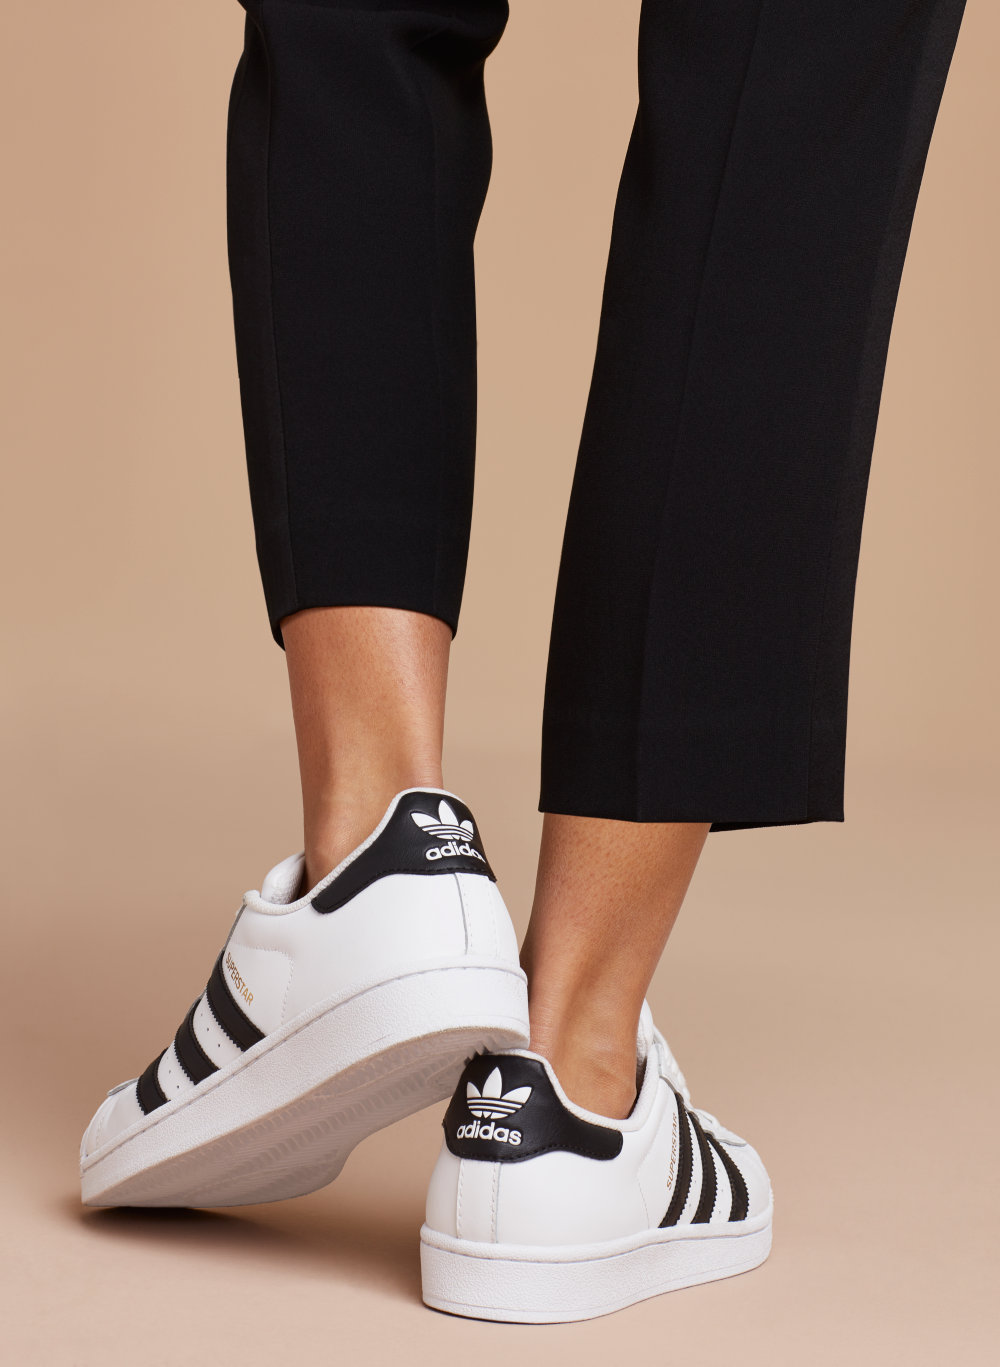 Amazon: Cheap Adidas Originals Superstar 80s Primeknit Sneaker: Shoes